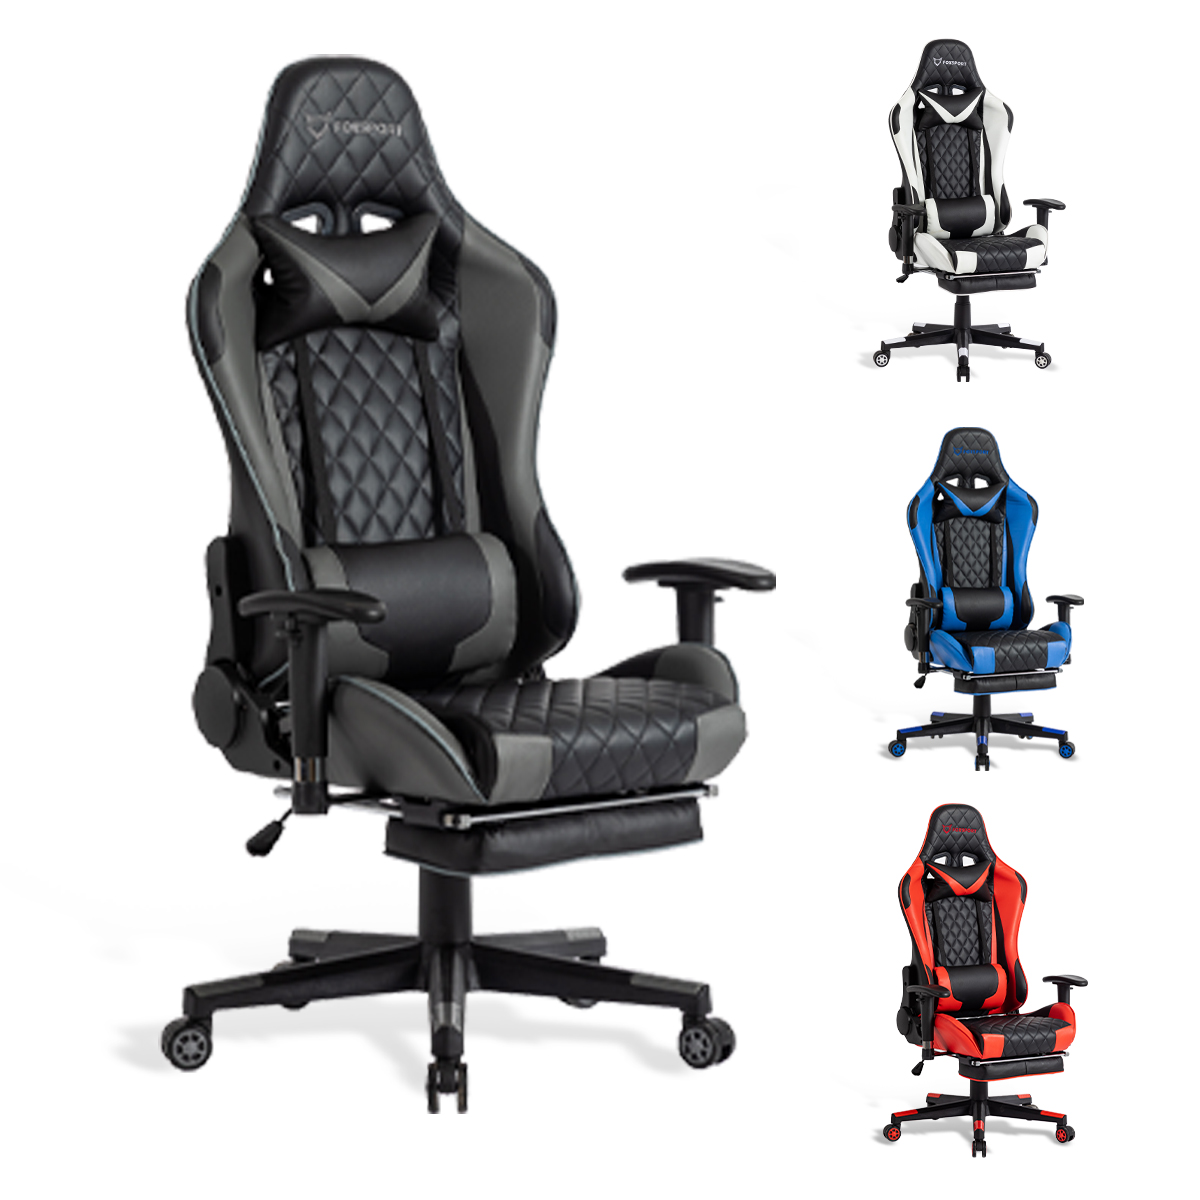 schwarz Schwarz/Grau Gaming-Stuhl, Beinstütze FOXSPORT